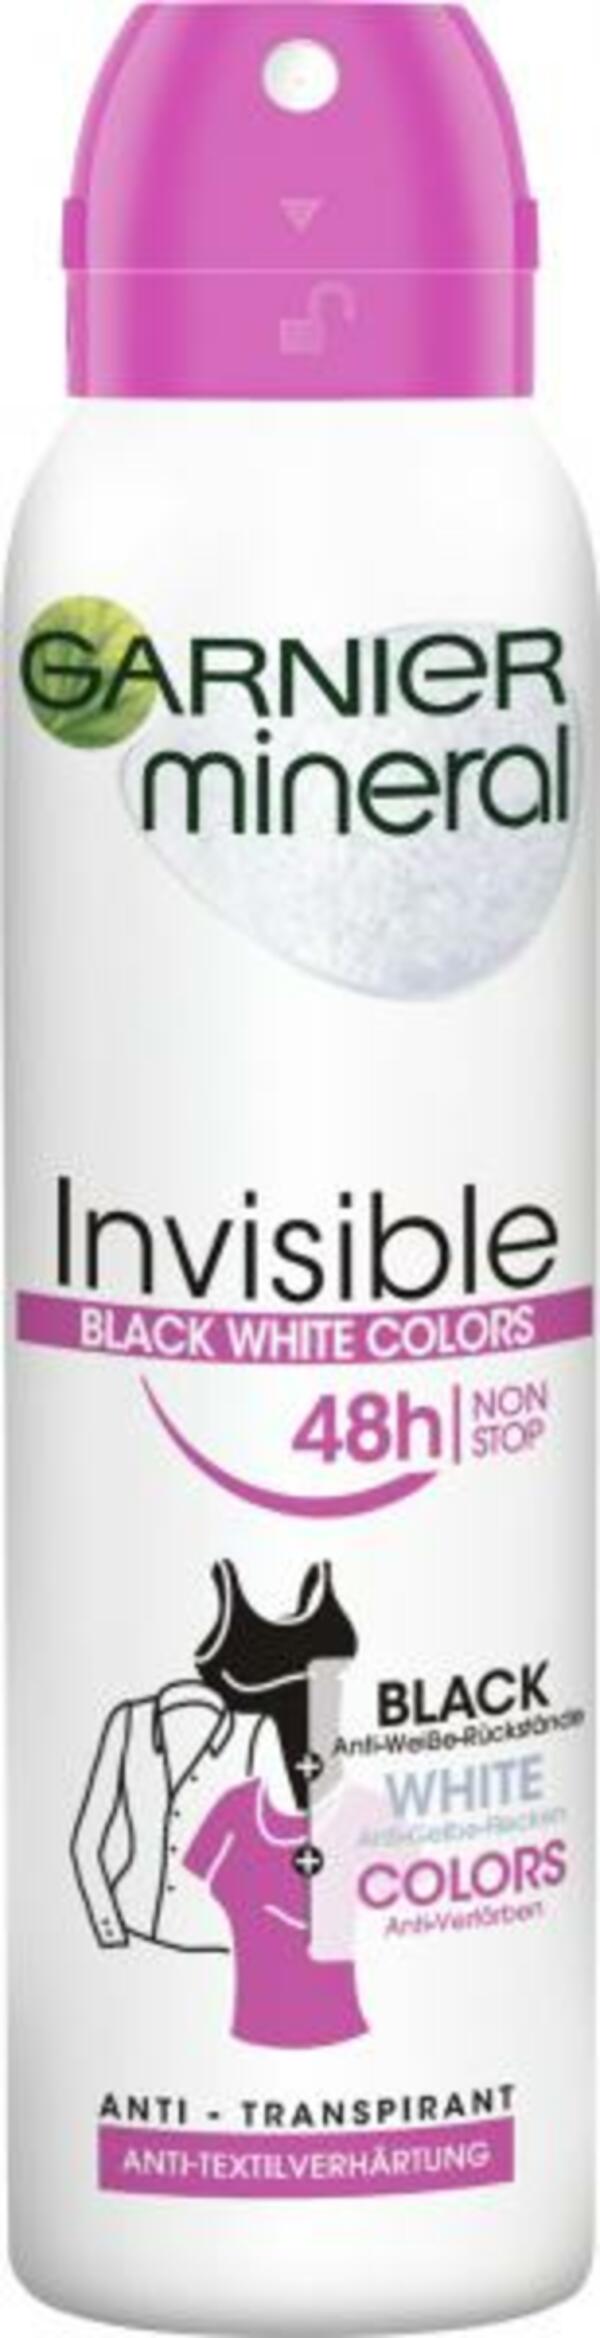 Bild 1 von Garnier Mineral Invisible Black White Colors Deo-Spray